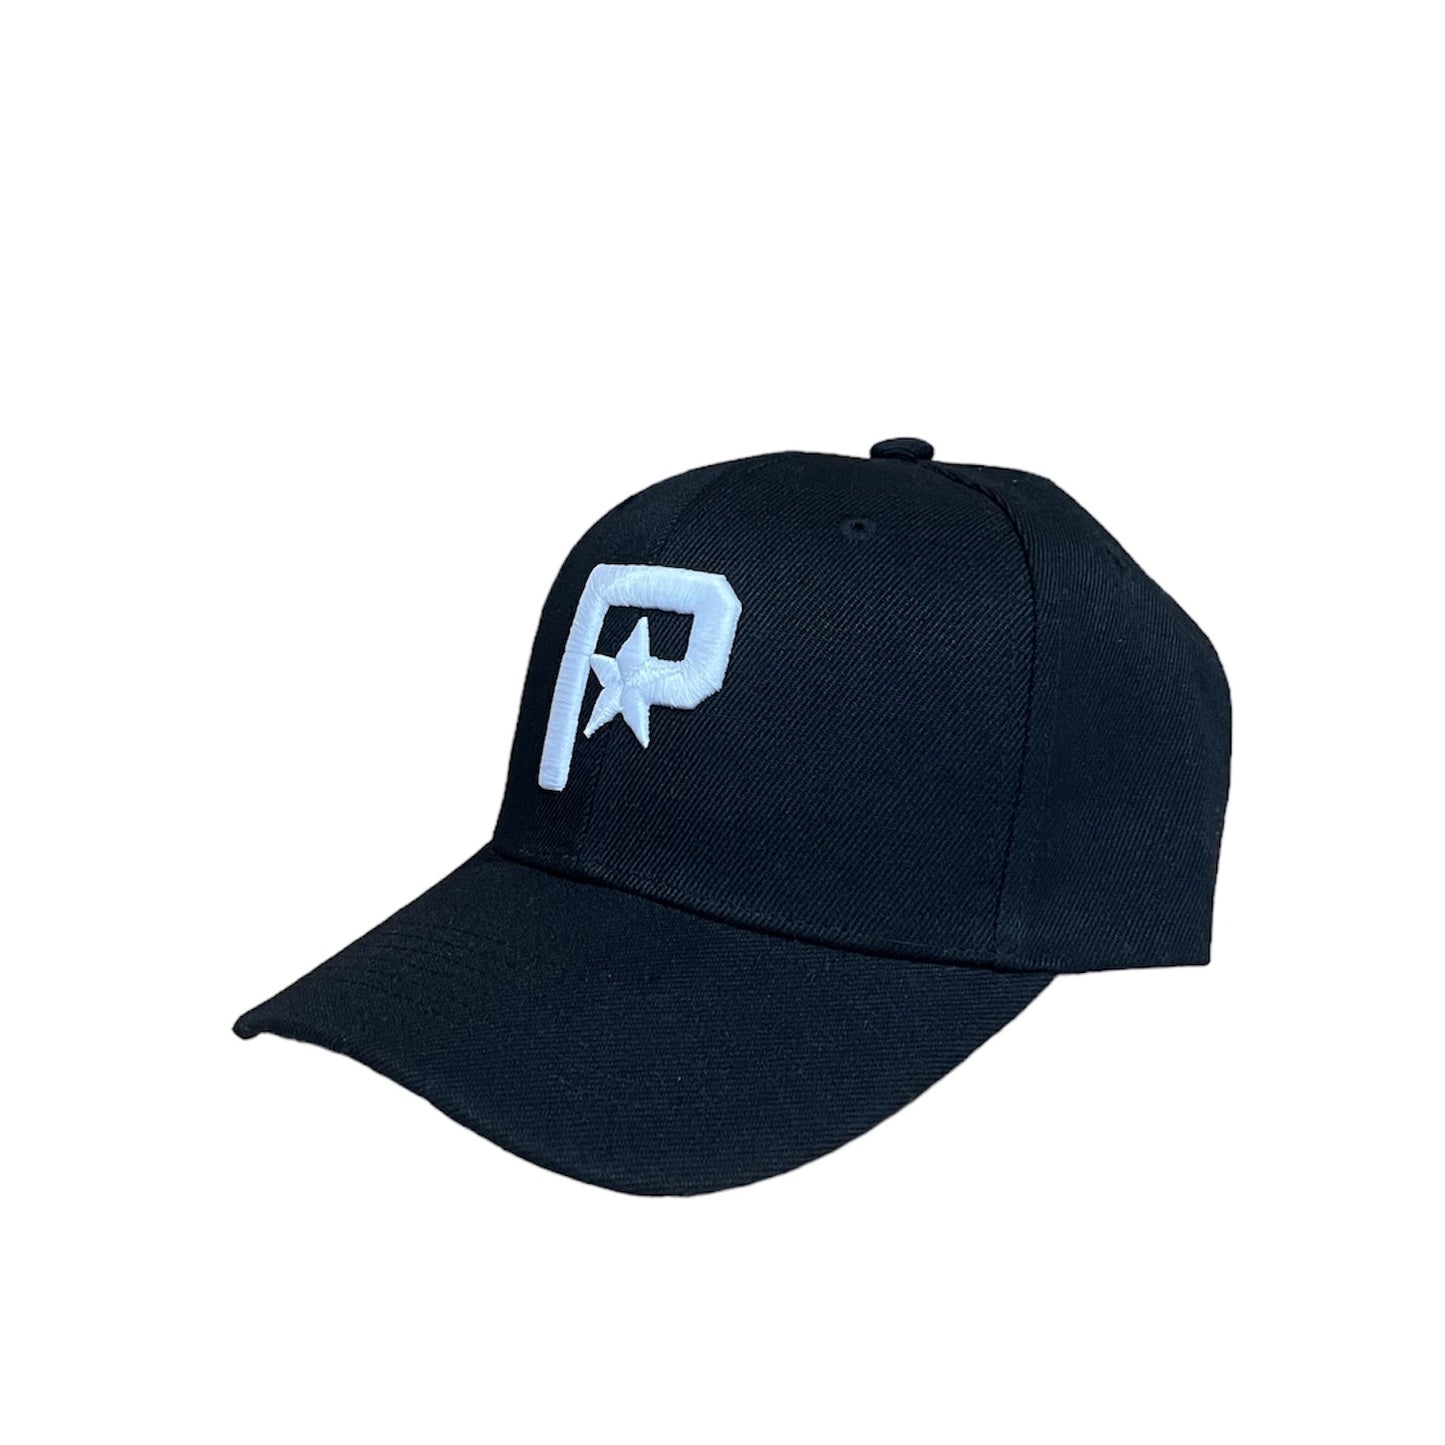 P-Star Black Baseball caps